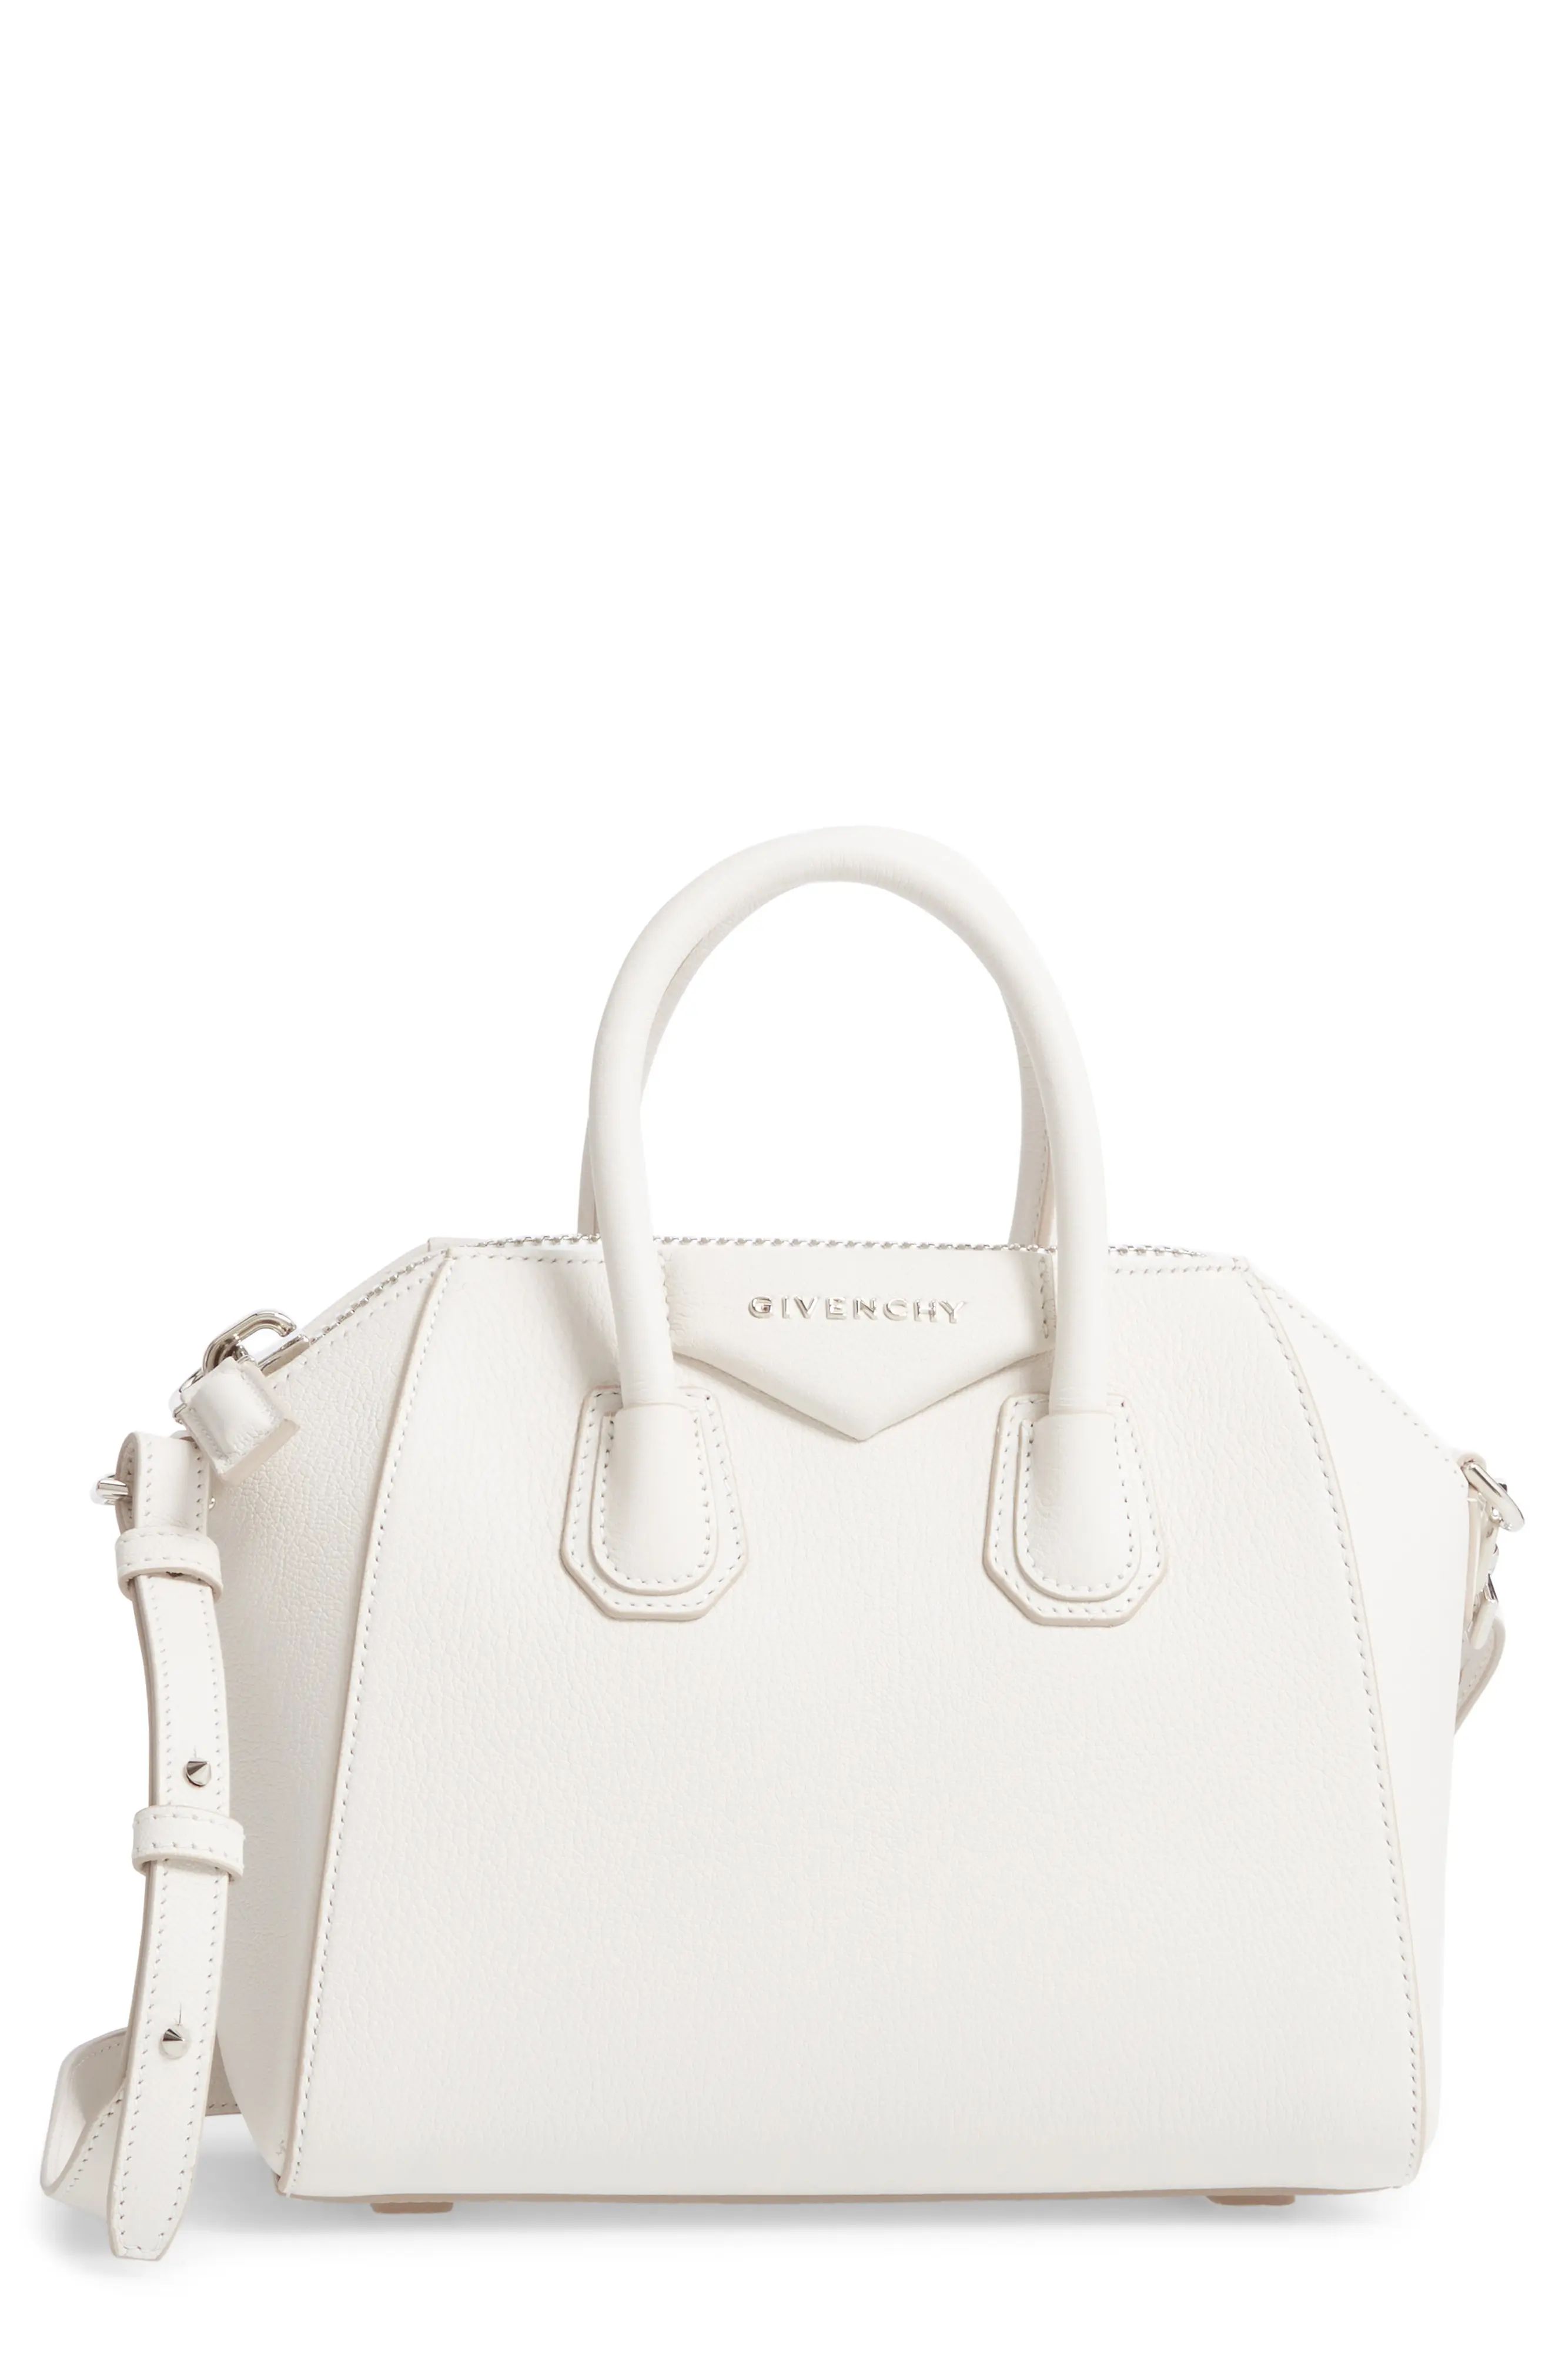 Givenchy 'Mini Antigona' Sugar Leather Satchel - White | Nordstrom